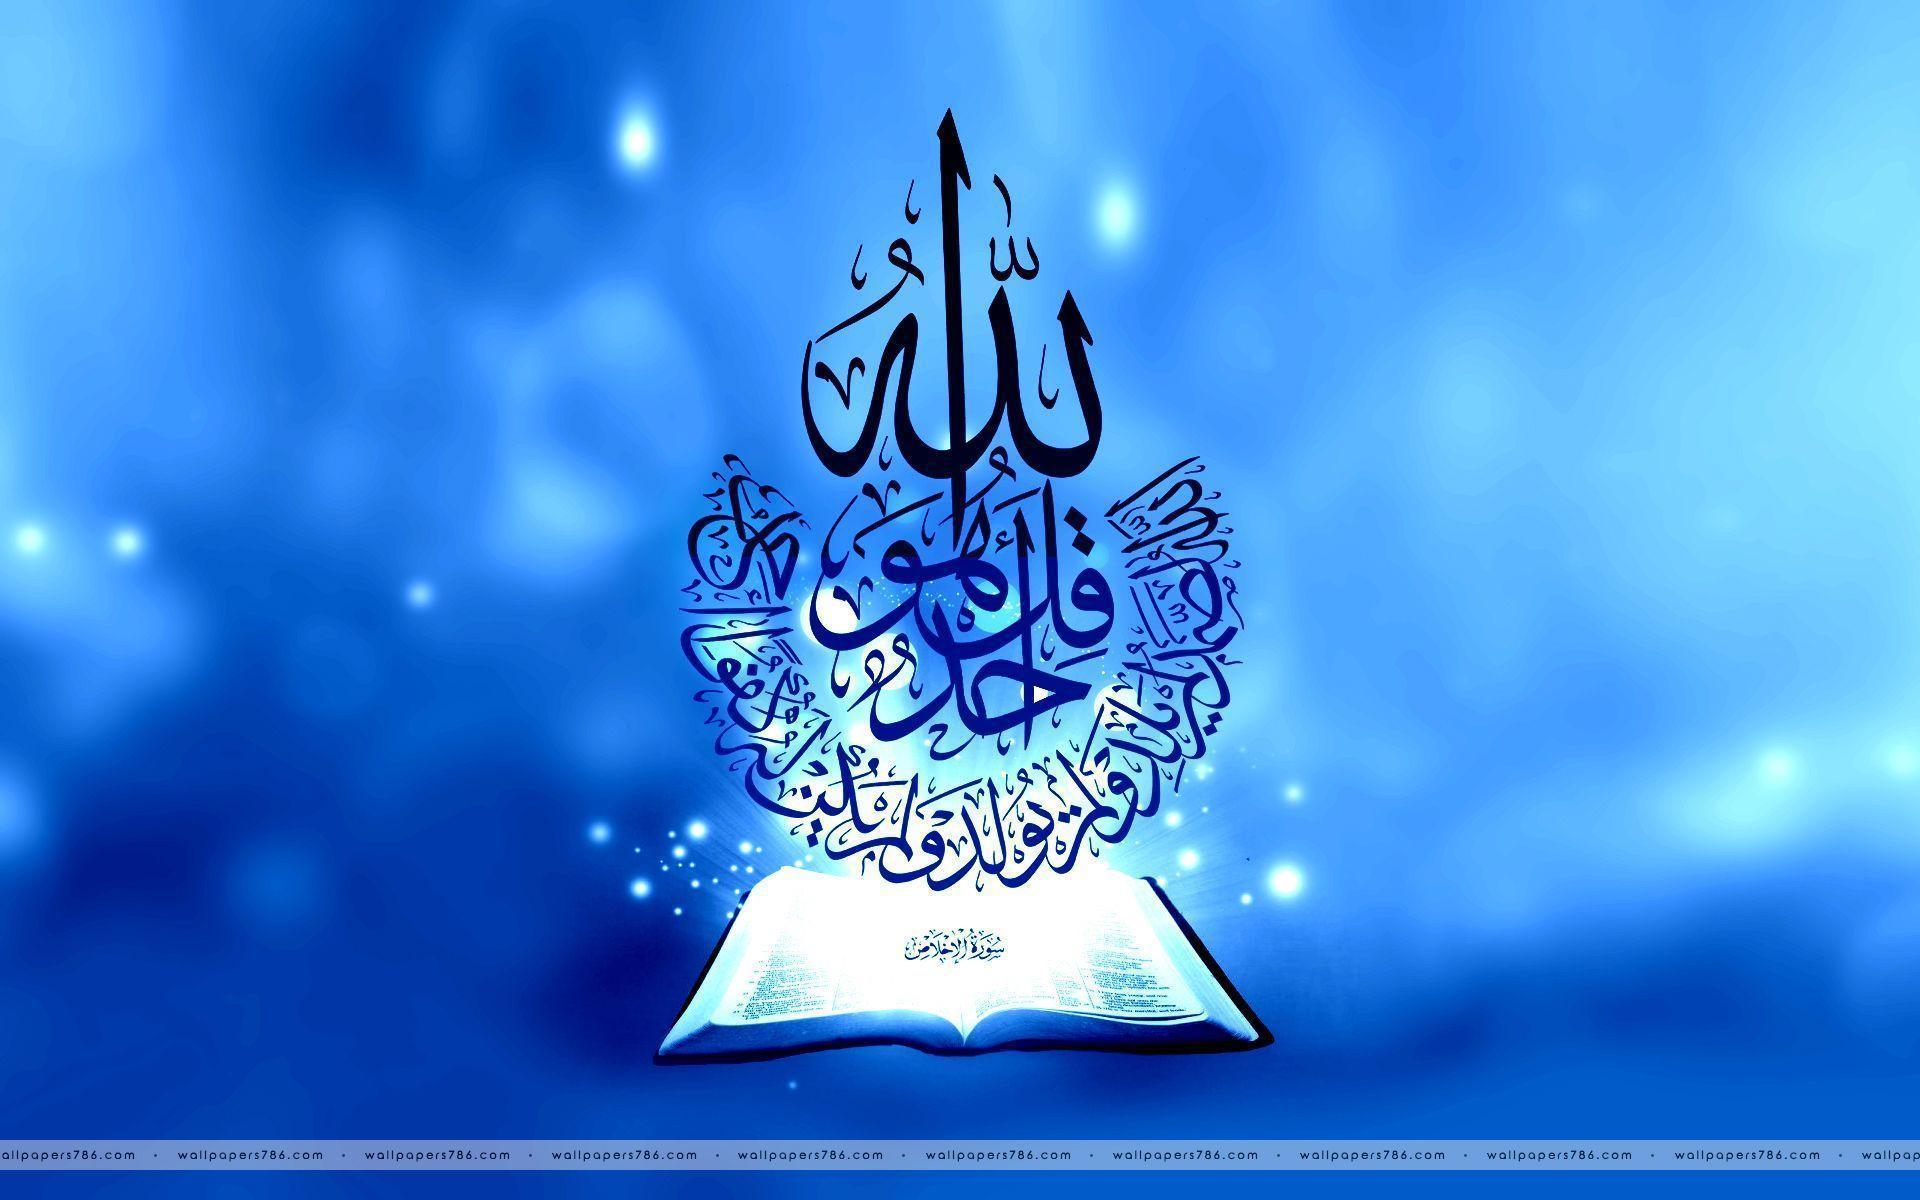 Allah Name Wallpaper Hd Free Download - Islamic Wallpaper Hd - 1920x1200  Wallpaper 